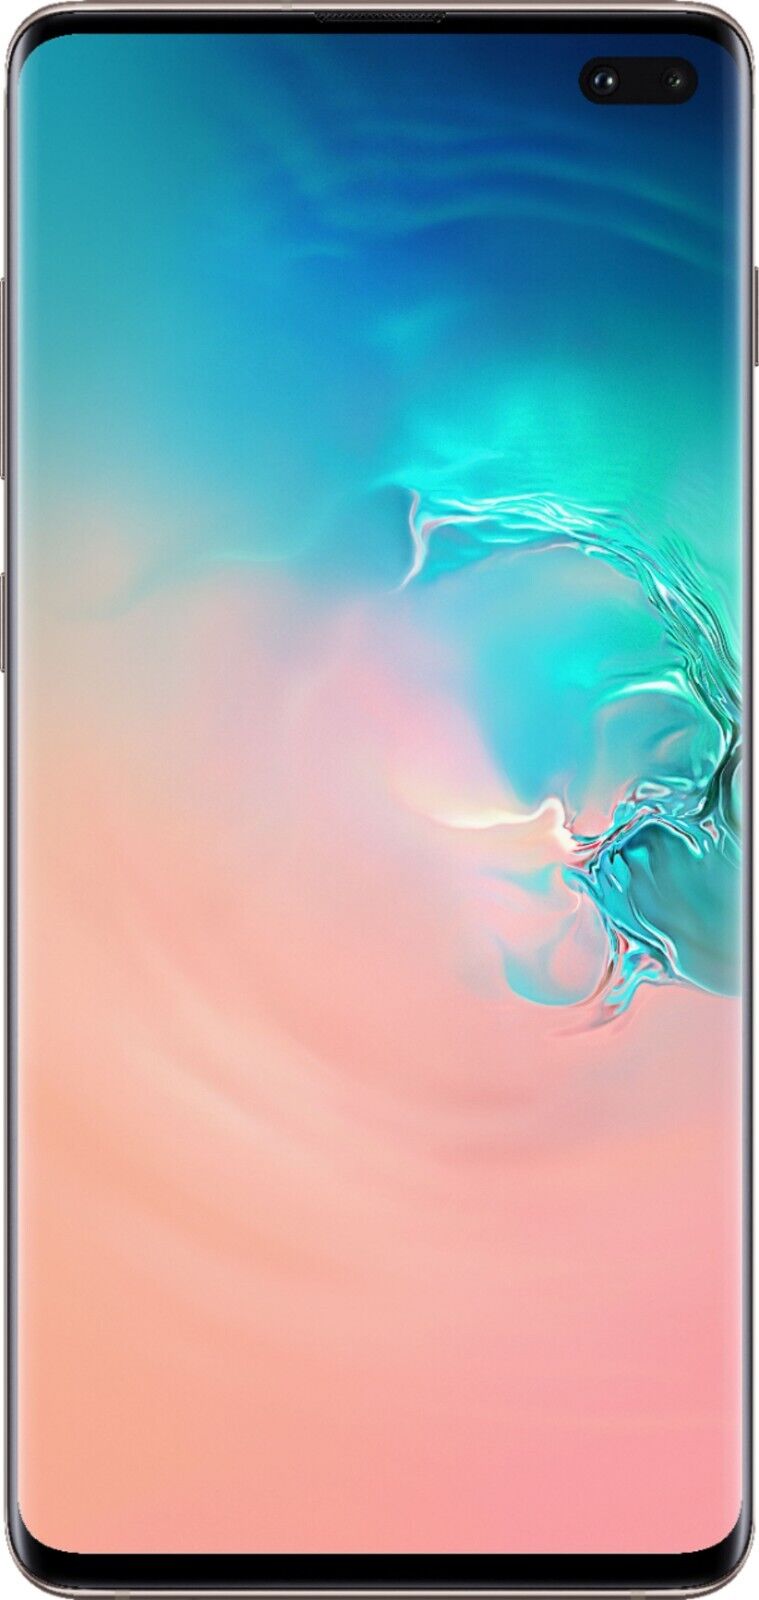 Galaxy S10 128GB - Flamingo Pink - Fully unlocked (GSM & CDMA)